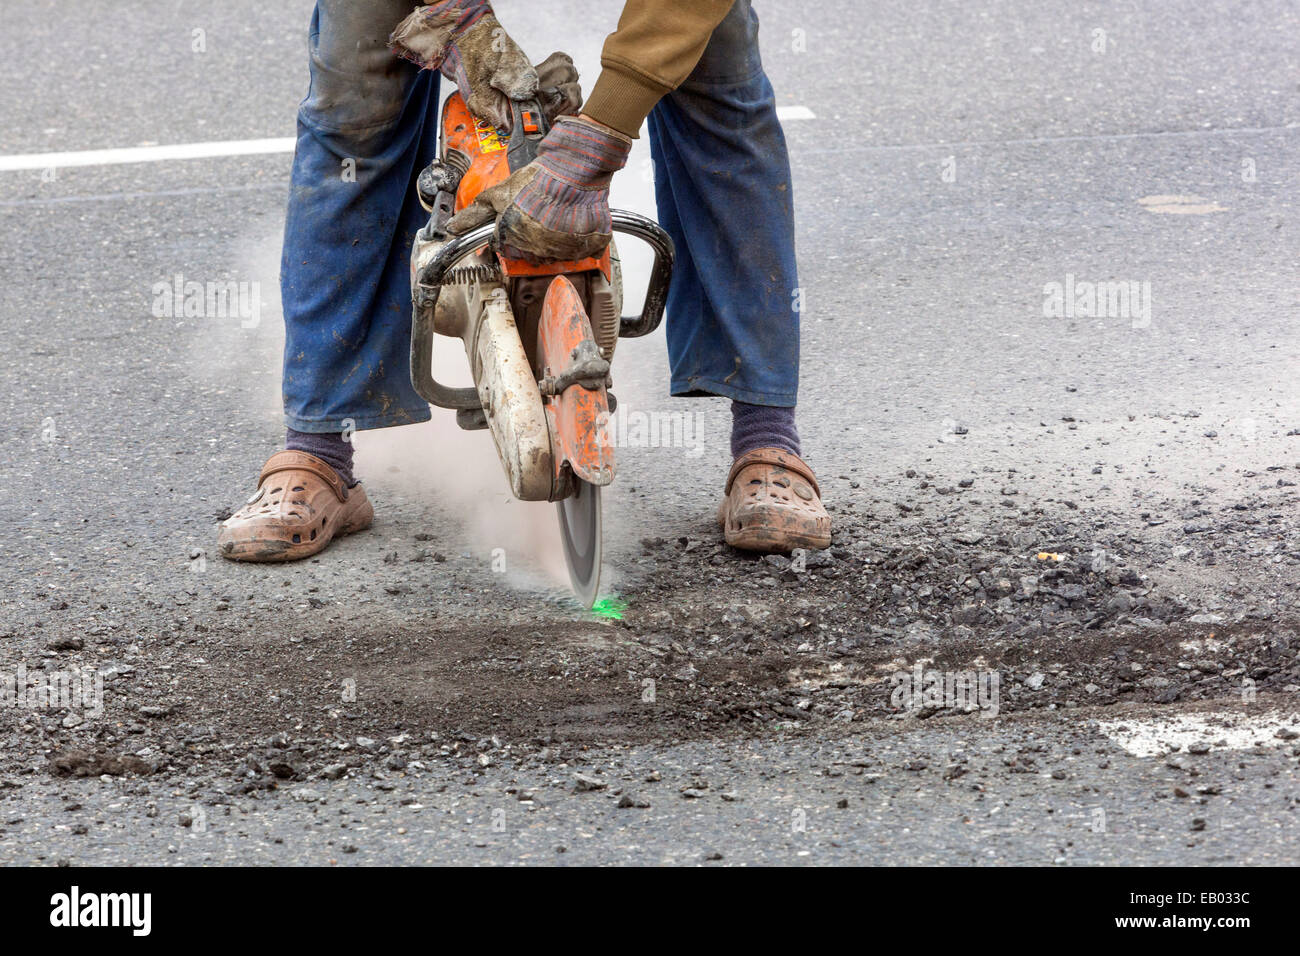 A man works cut asphalt road with a diamond cutter, No protective work gear, Czech Republic Stock Photo